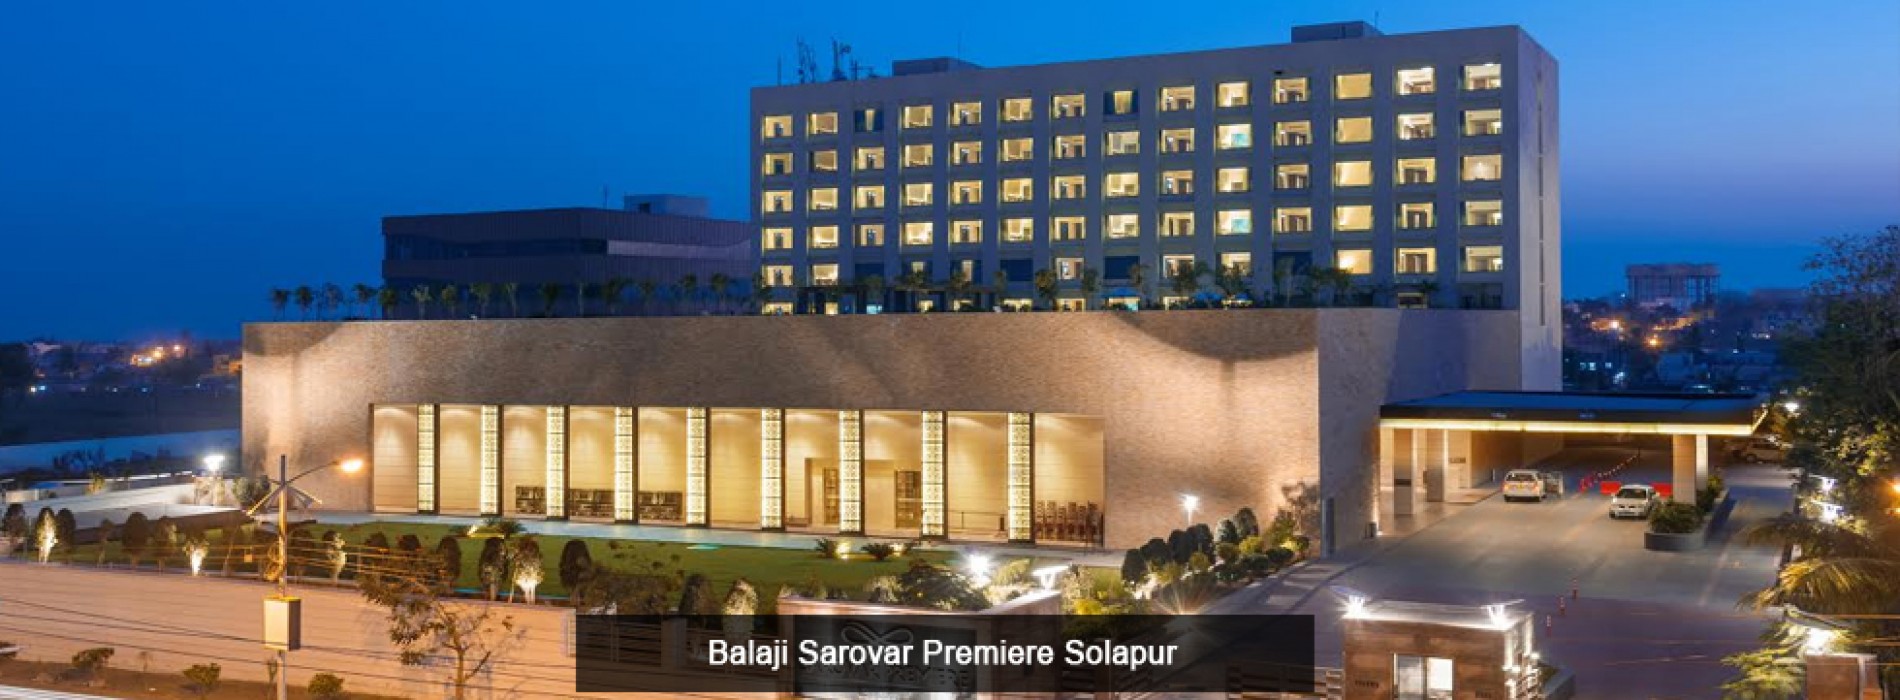 Balaji Sarovar Premiere Solapur receives IGBC’s Leed India Gold rating